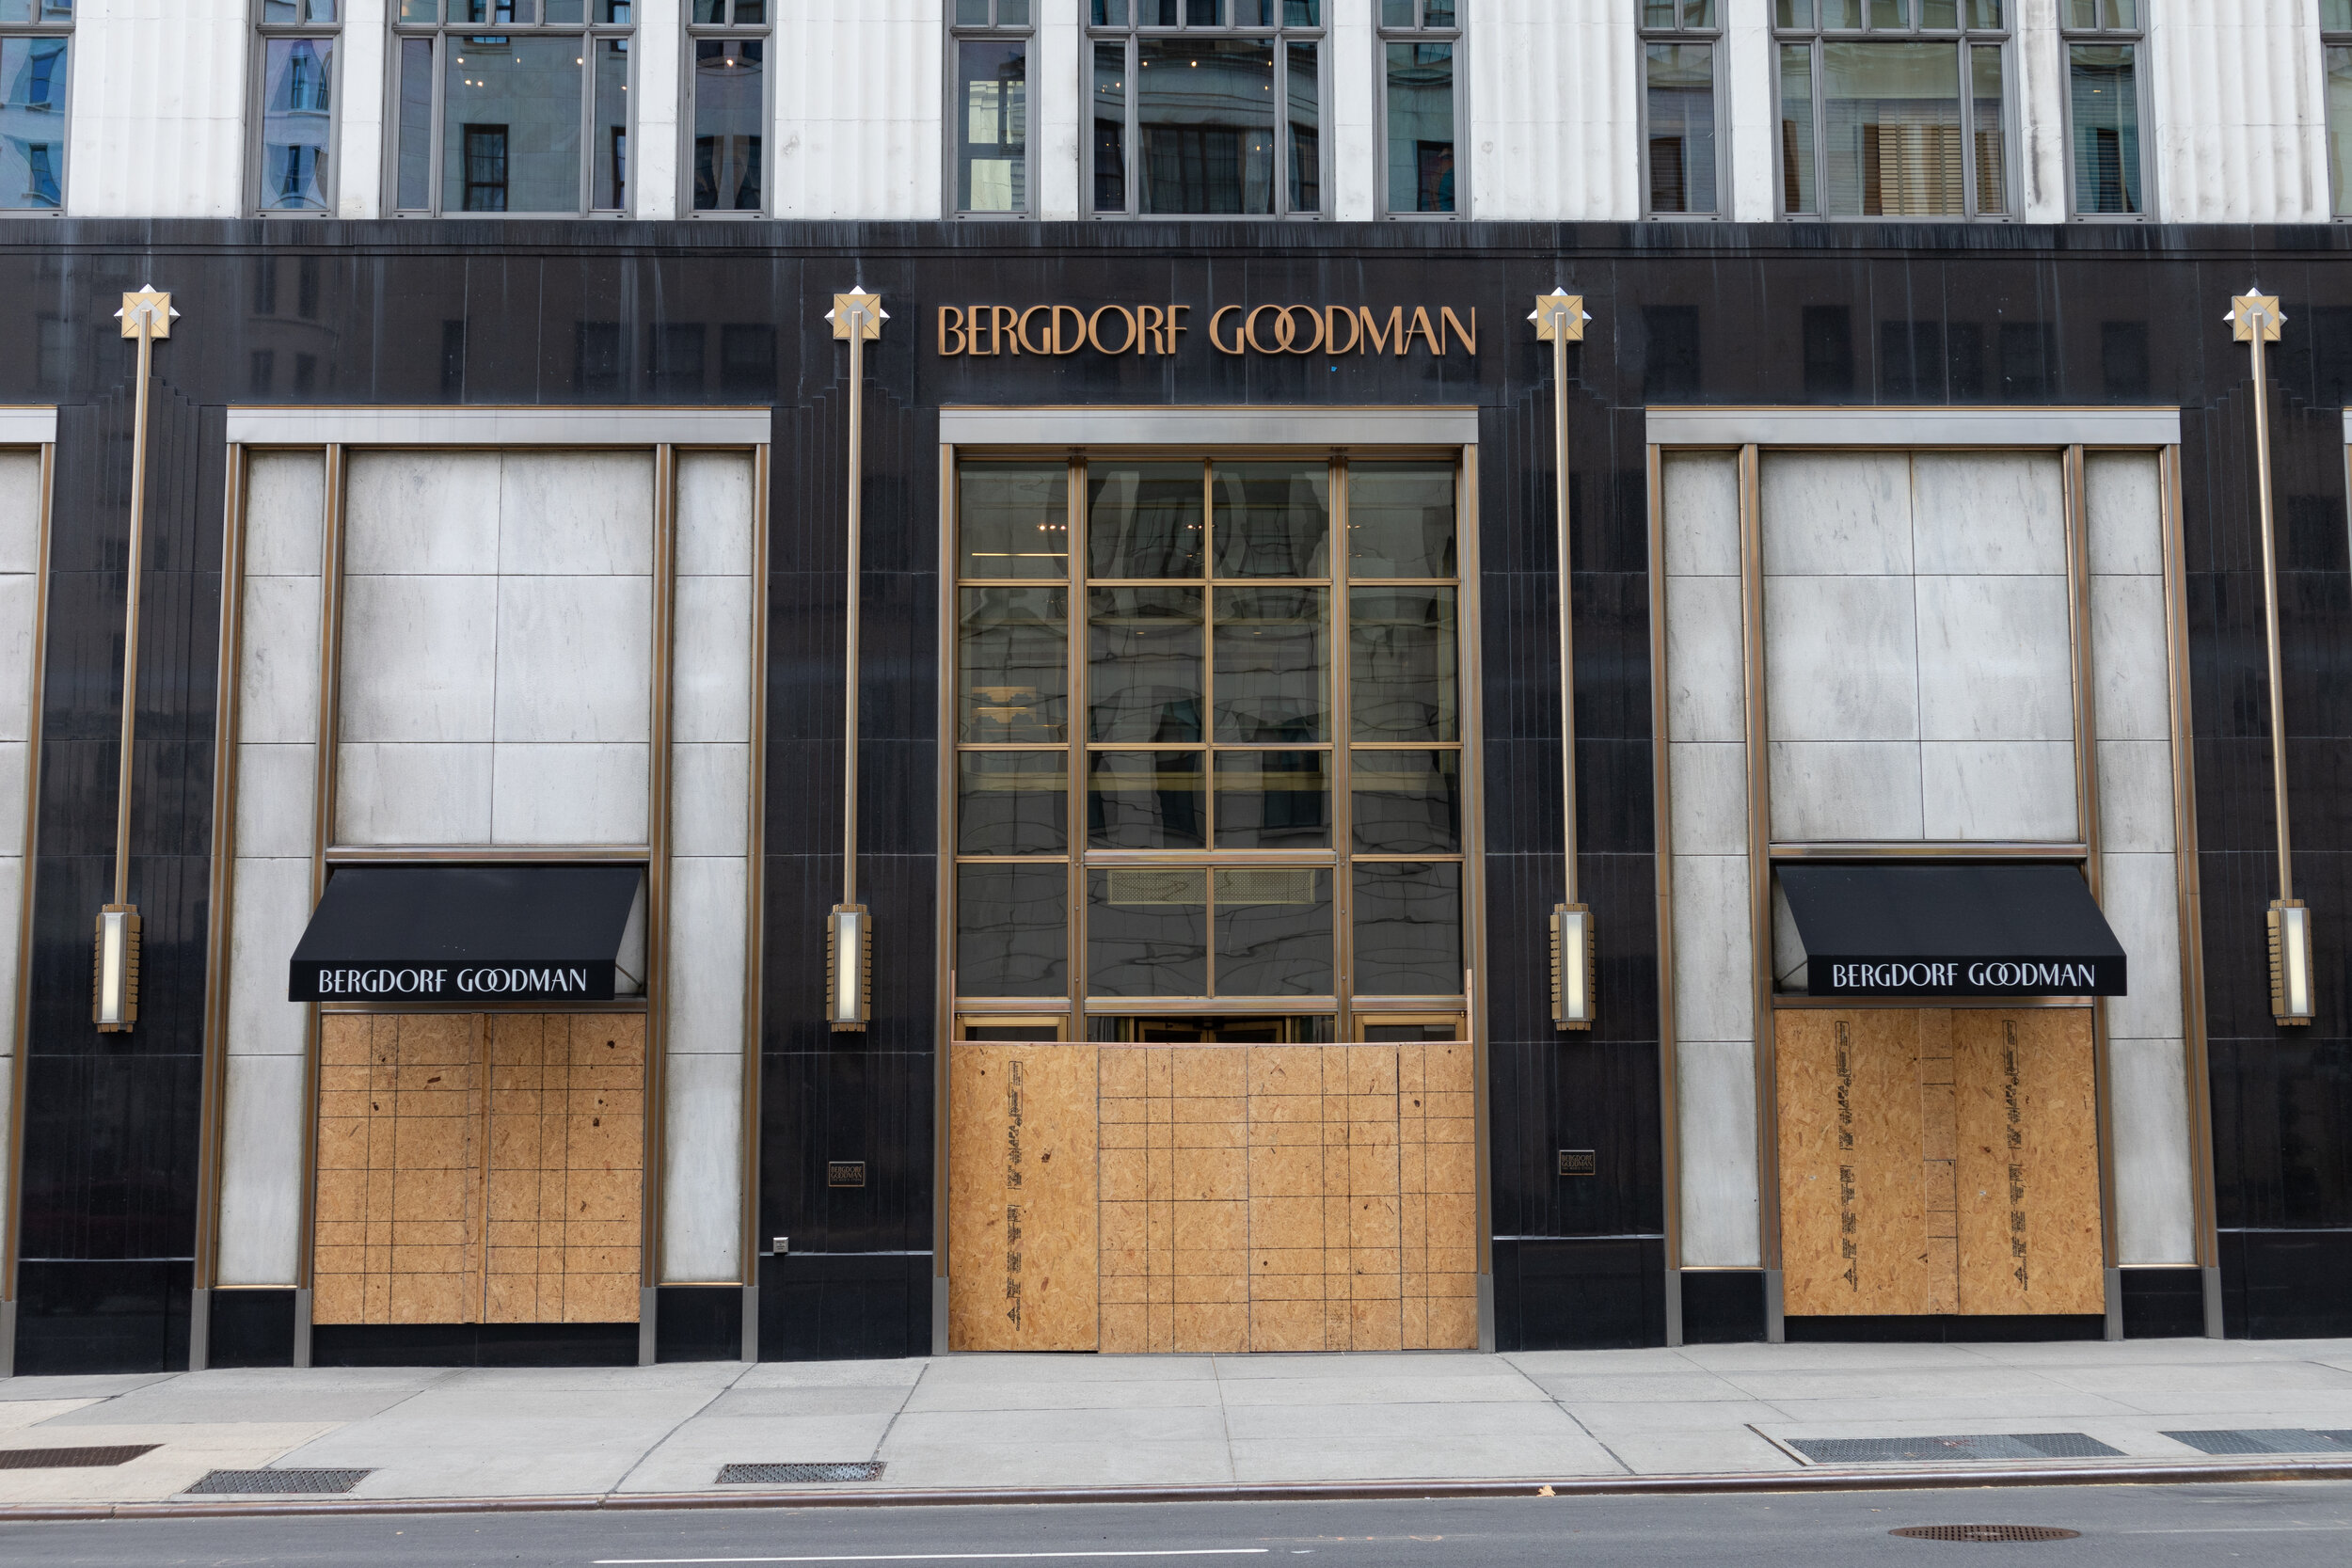 Looting Louis Vuitton : Portland